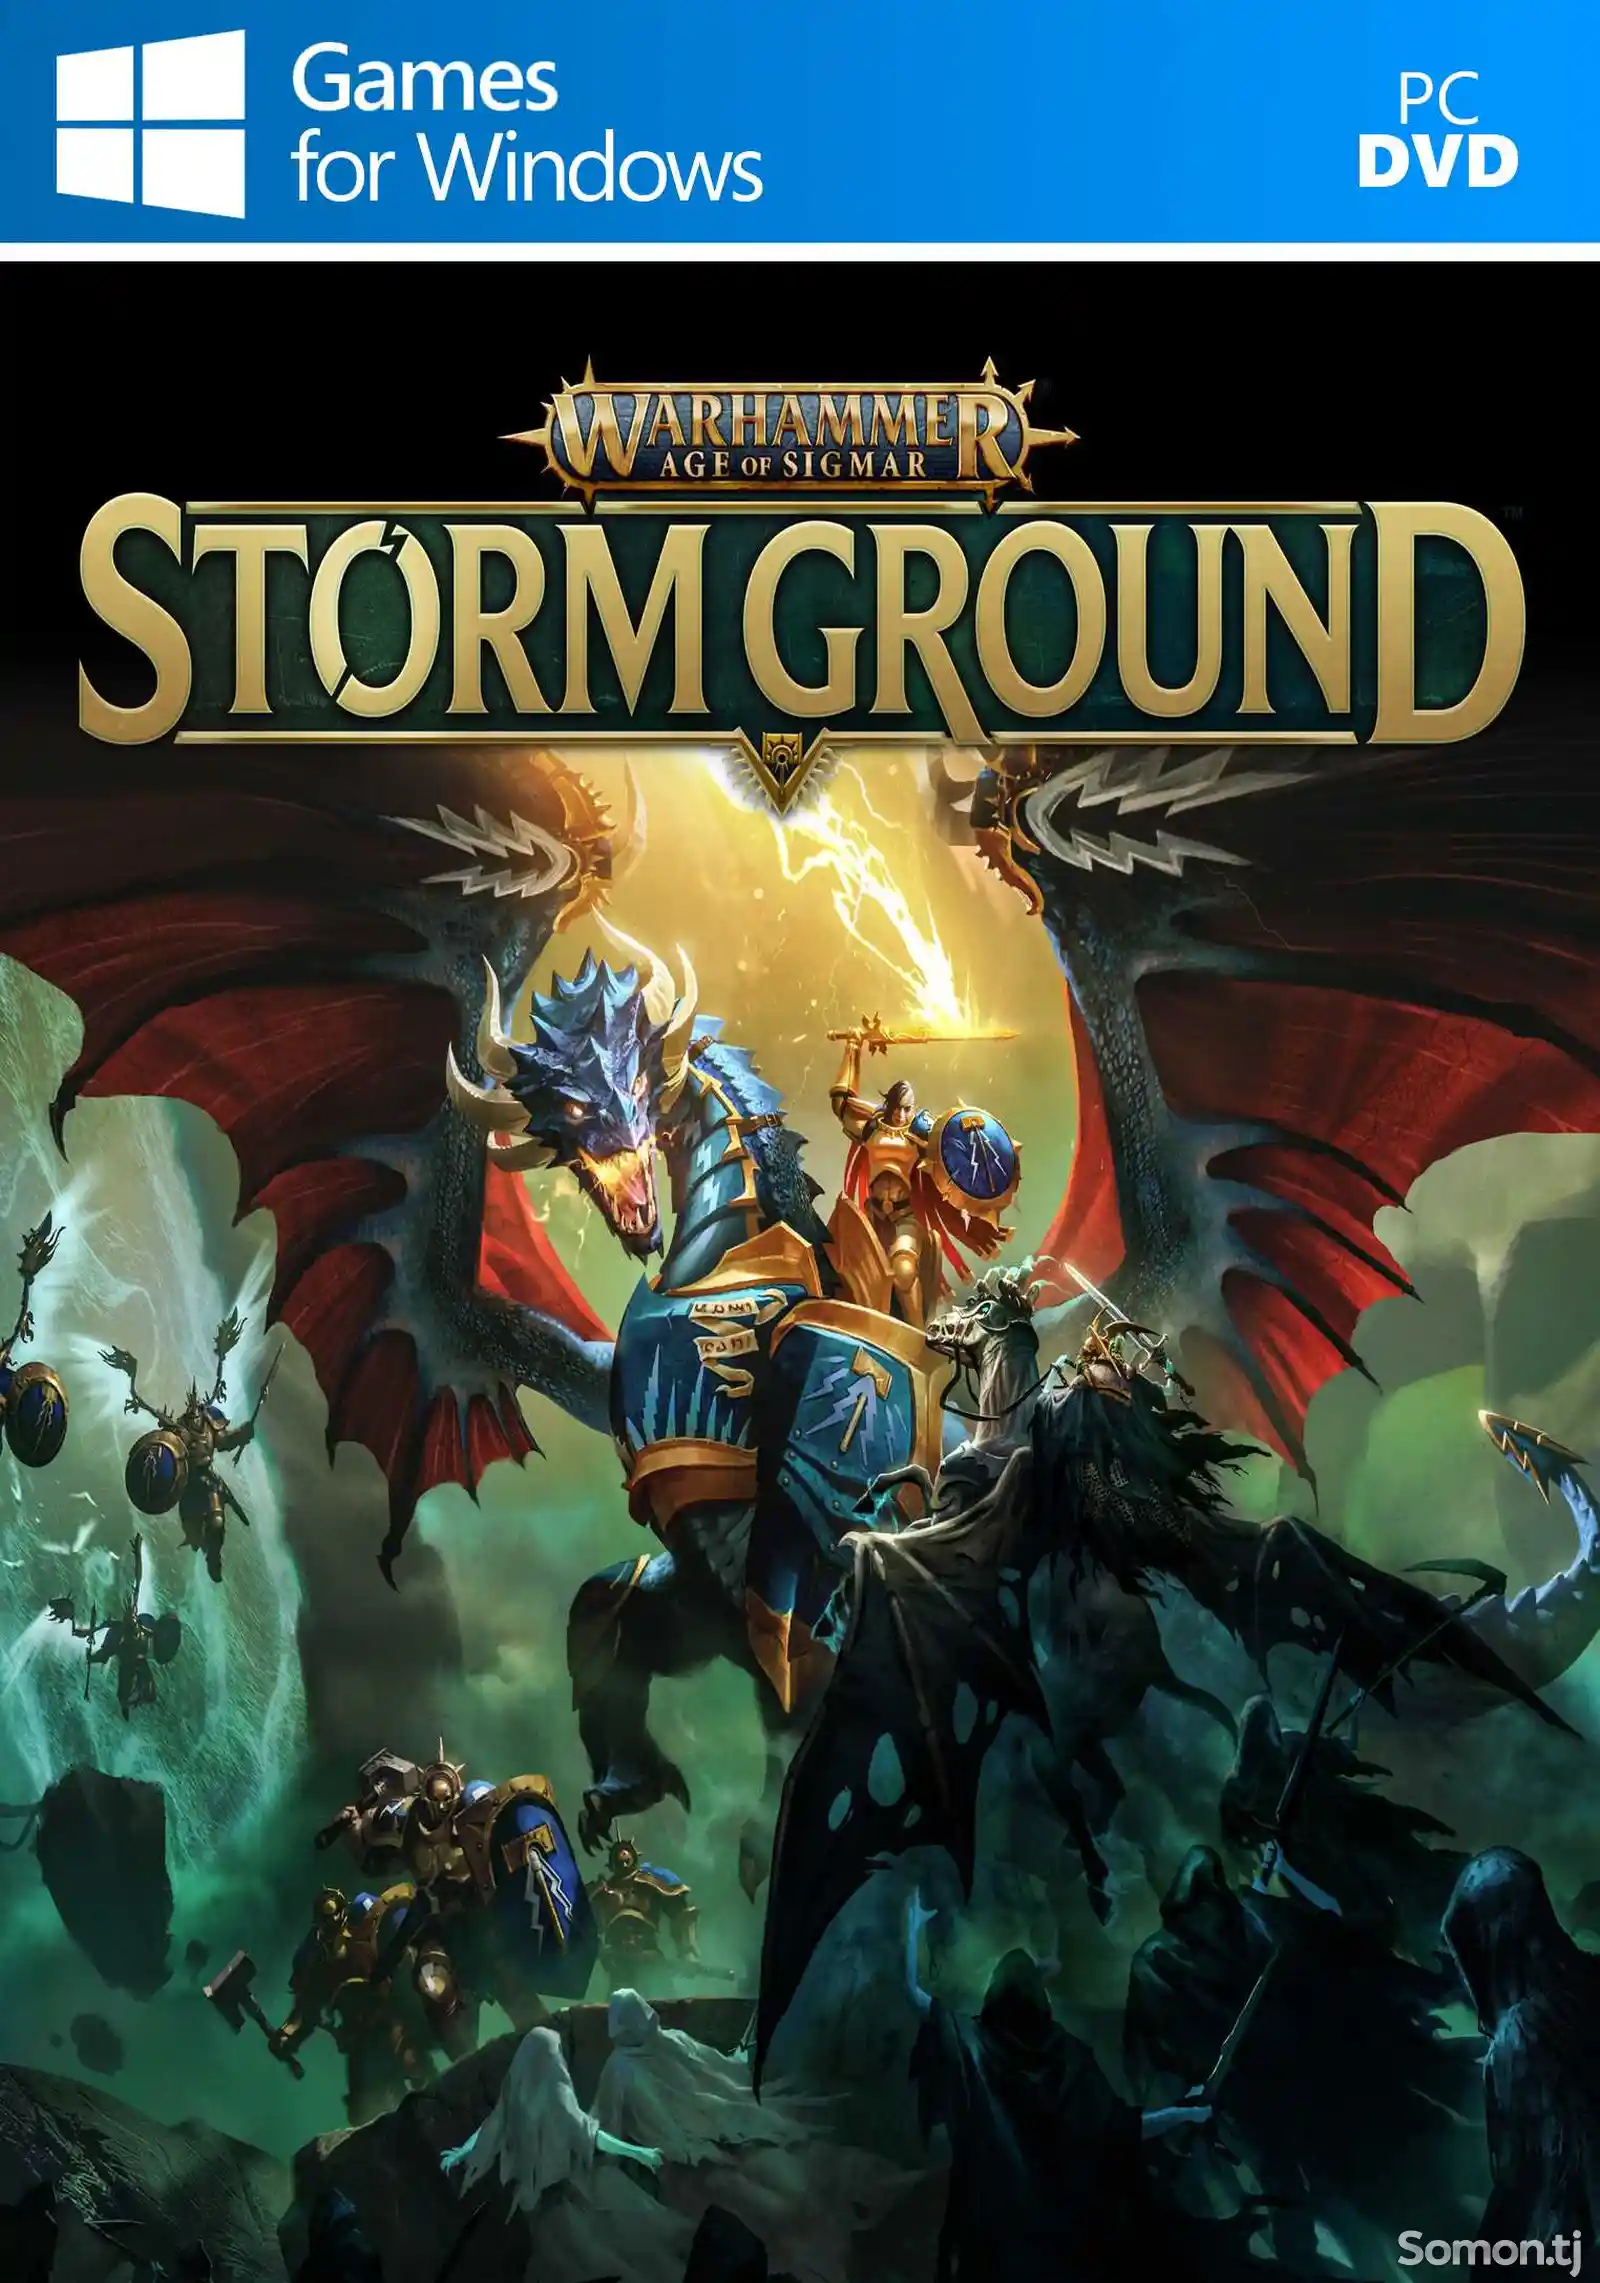 Игра Warhammer age of sigmar - storm ground для компьютера-пк-pc-1